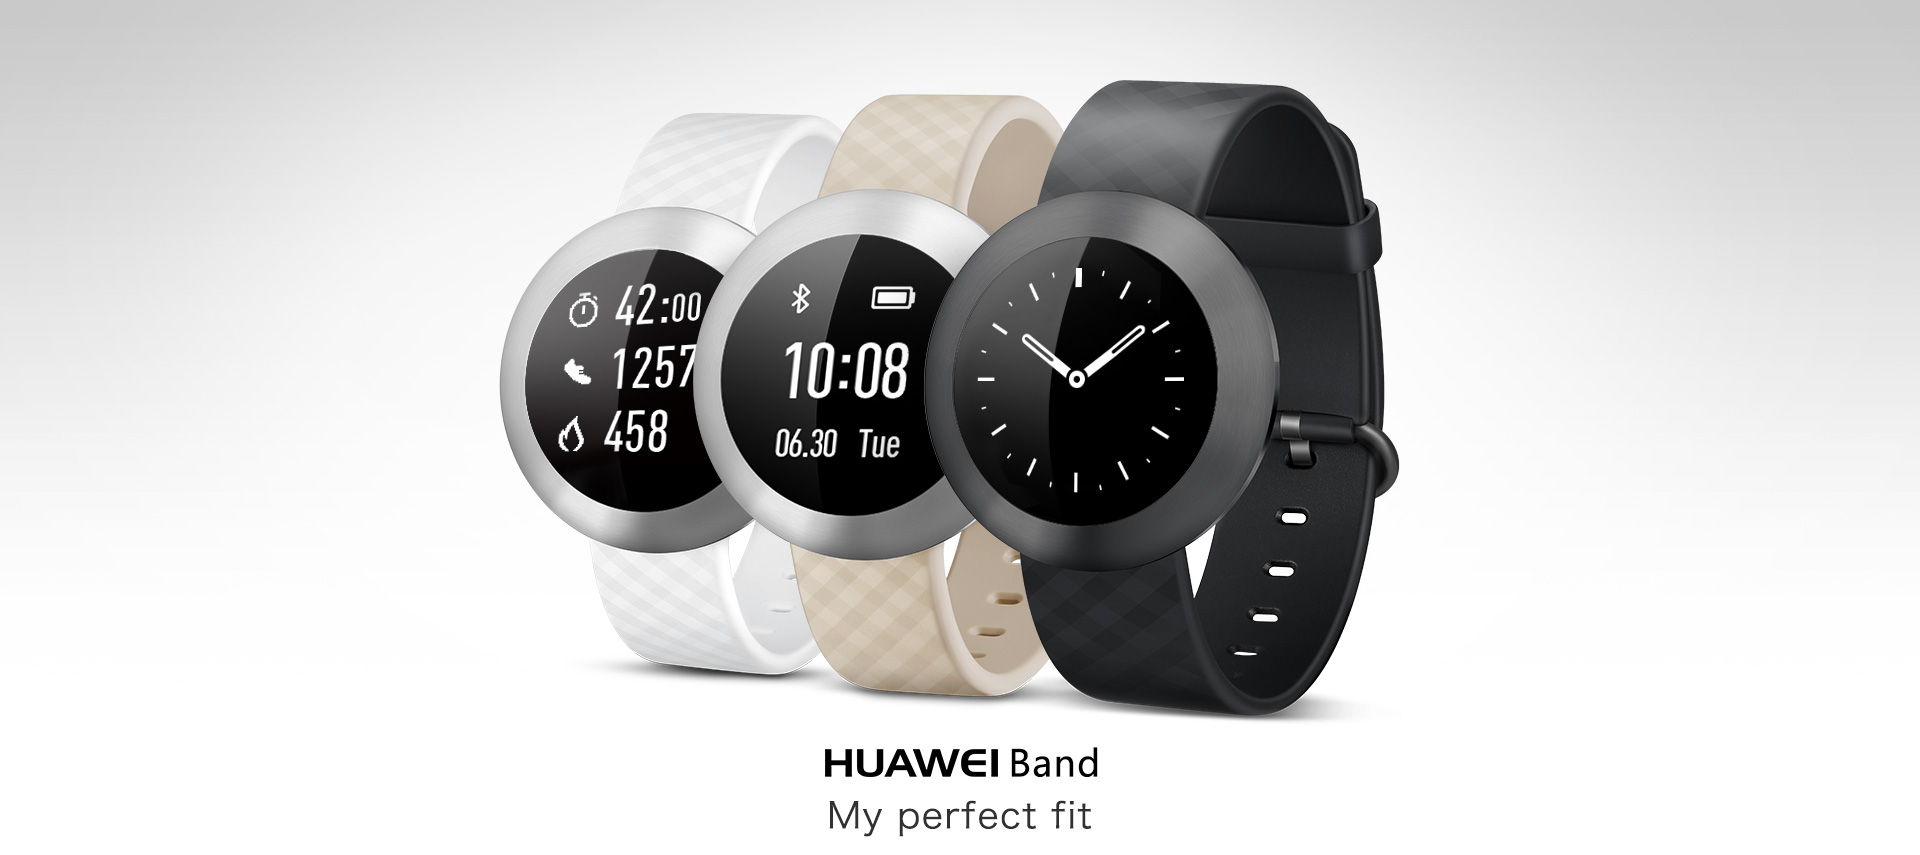 Как подключить часы к телефону huawei band. Хуавей бэнд 8. Часы Хуавей бэнд 8. Huawei Band 1. Умные часы Huawei Band 8.